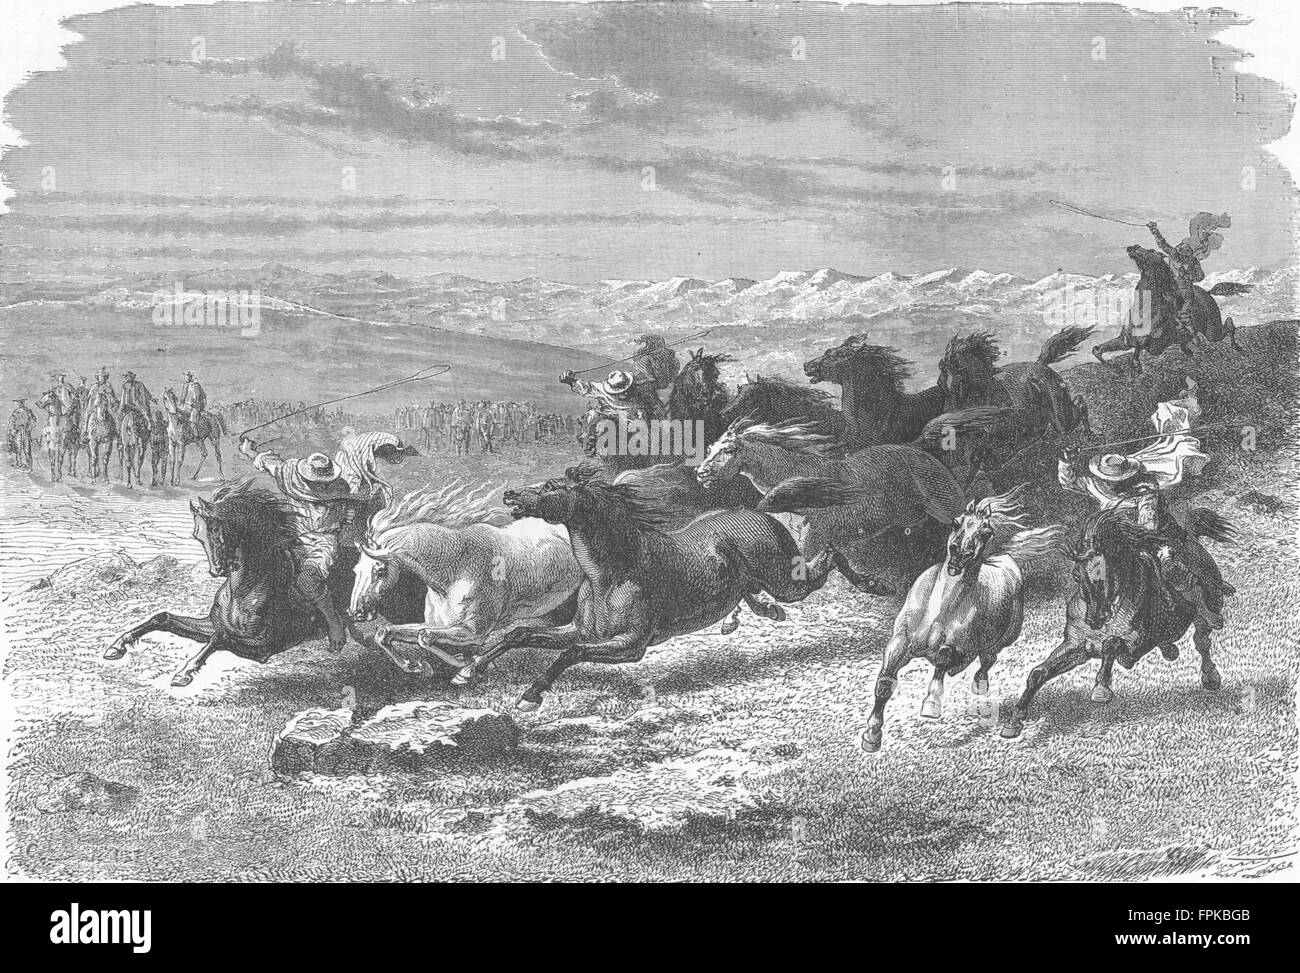 ARGENTINA: Catching horses with Lasso, antique print 1880 Stock Photo